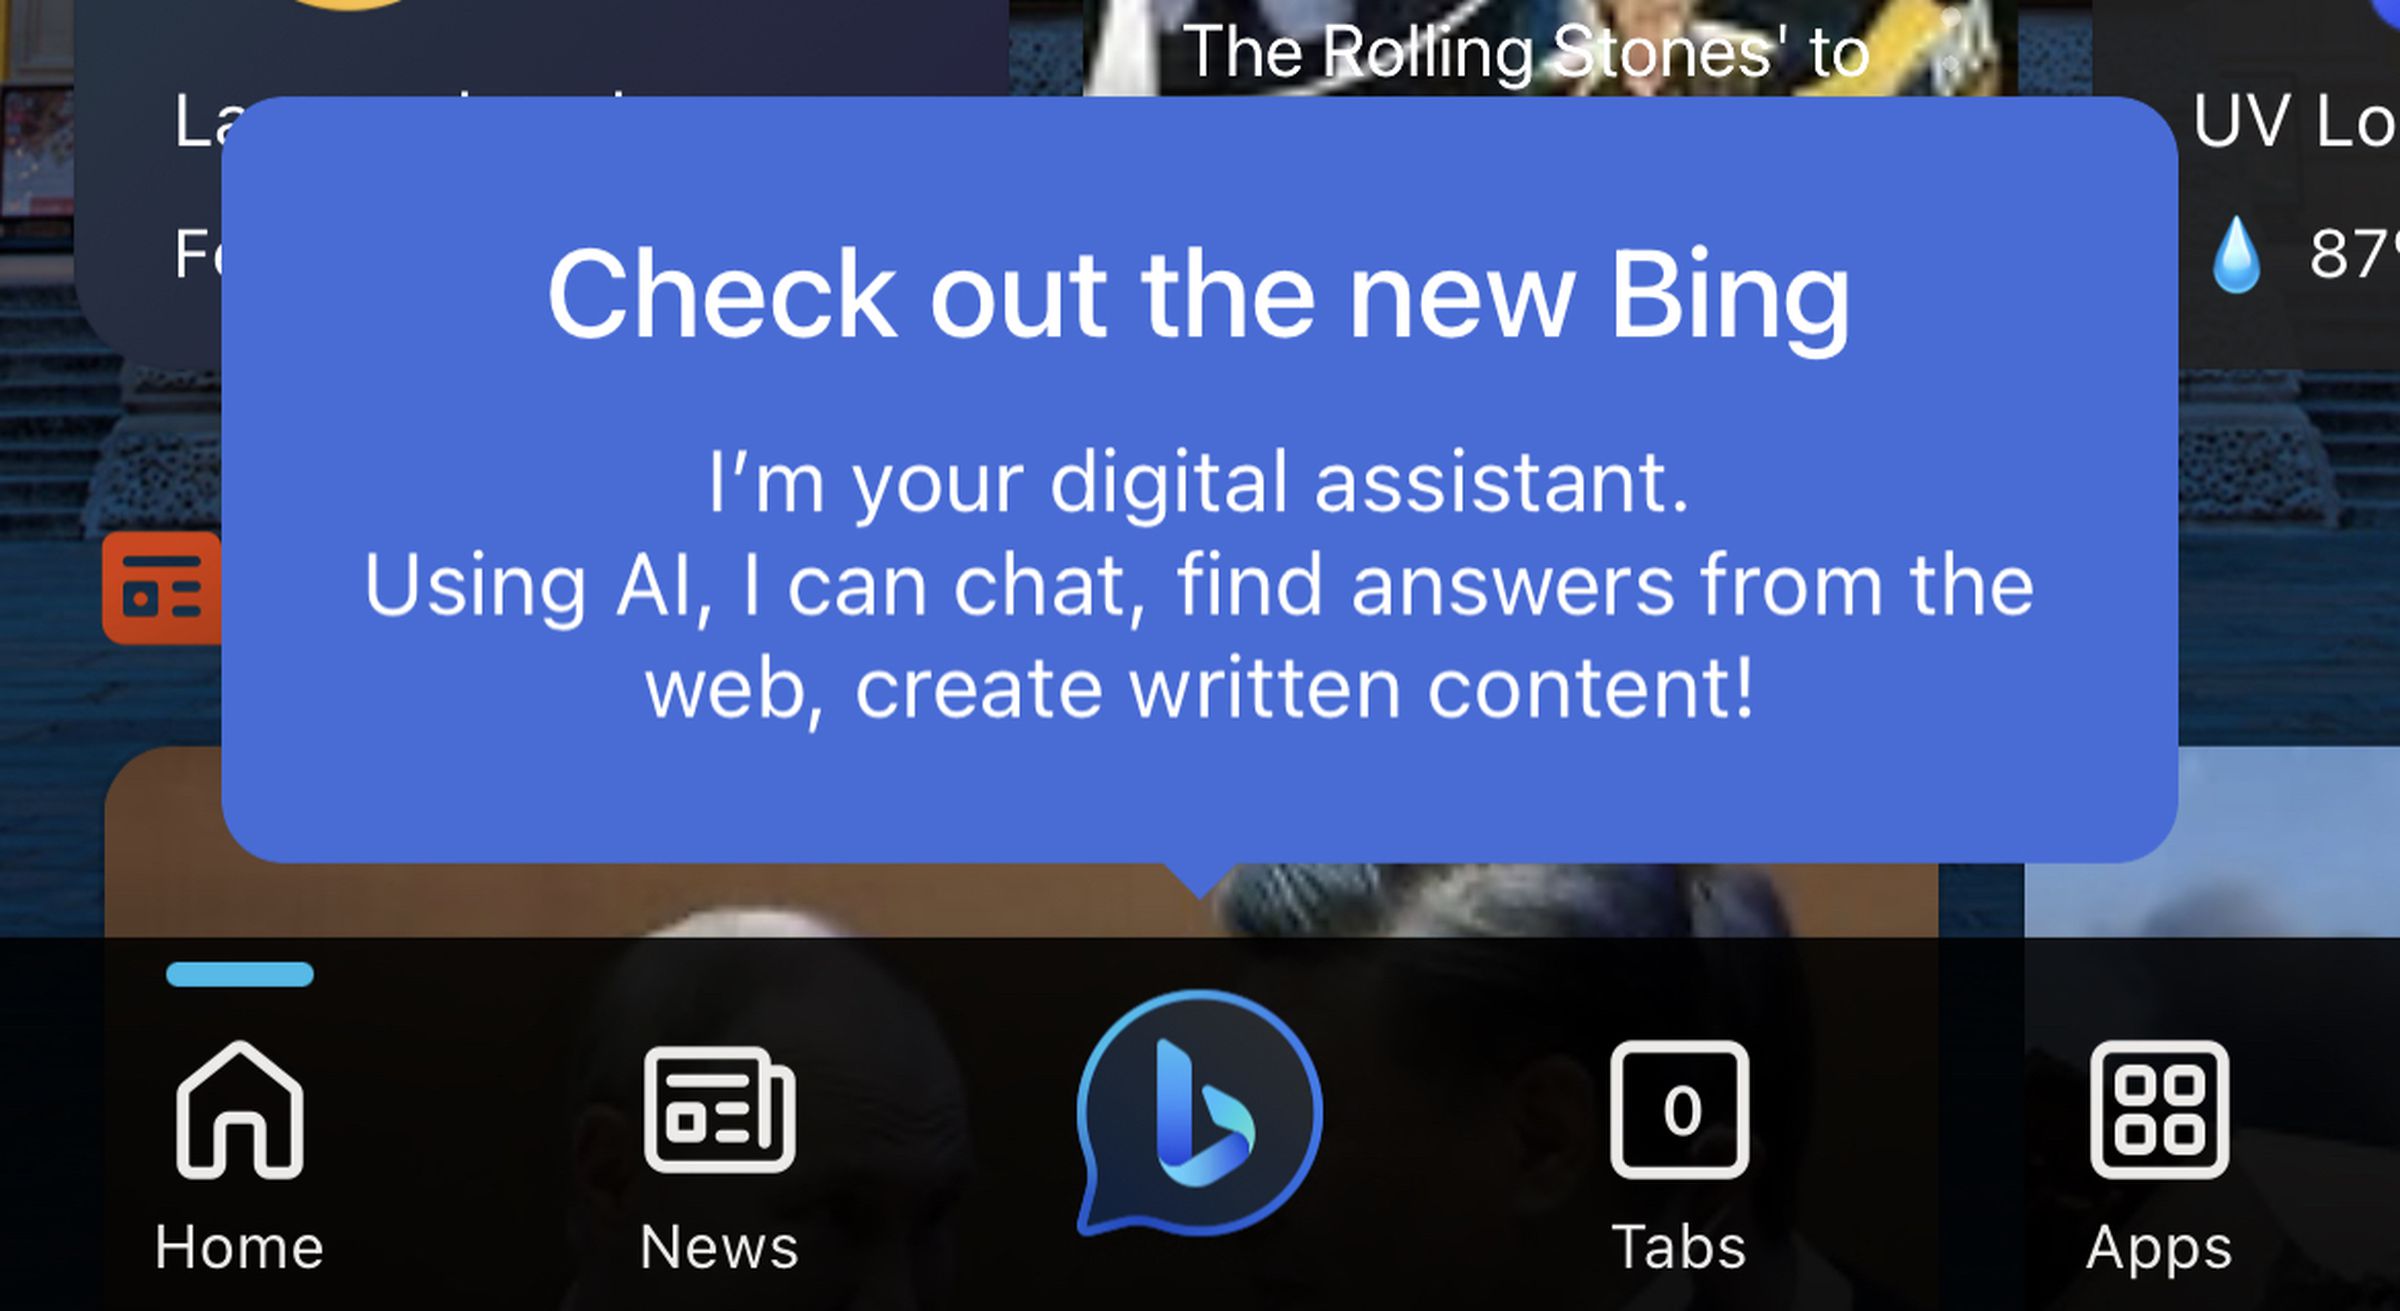 A screenshot of Bing's mobile app showing 